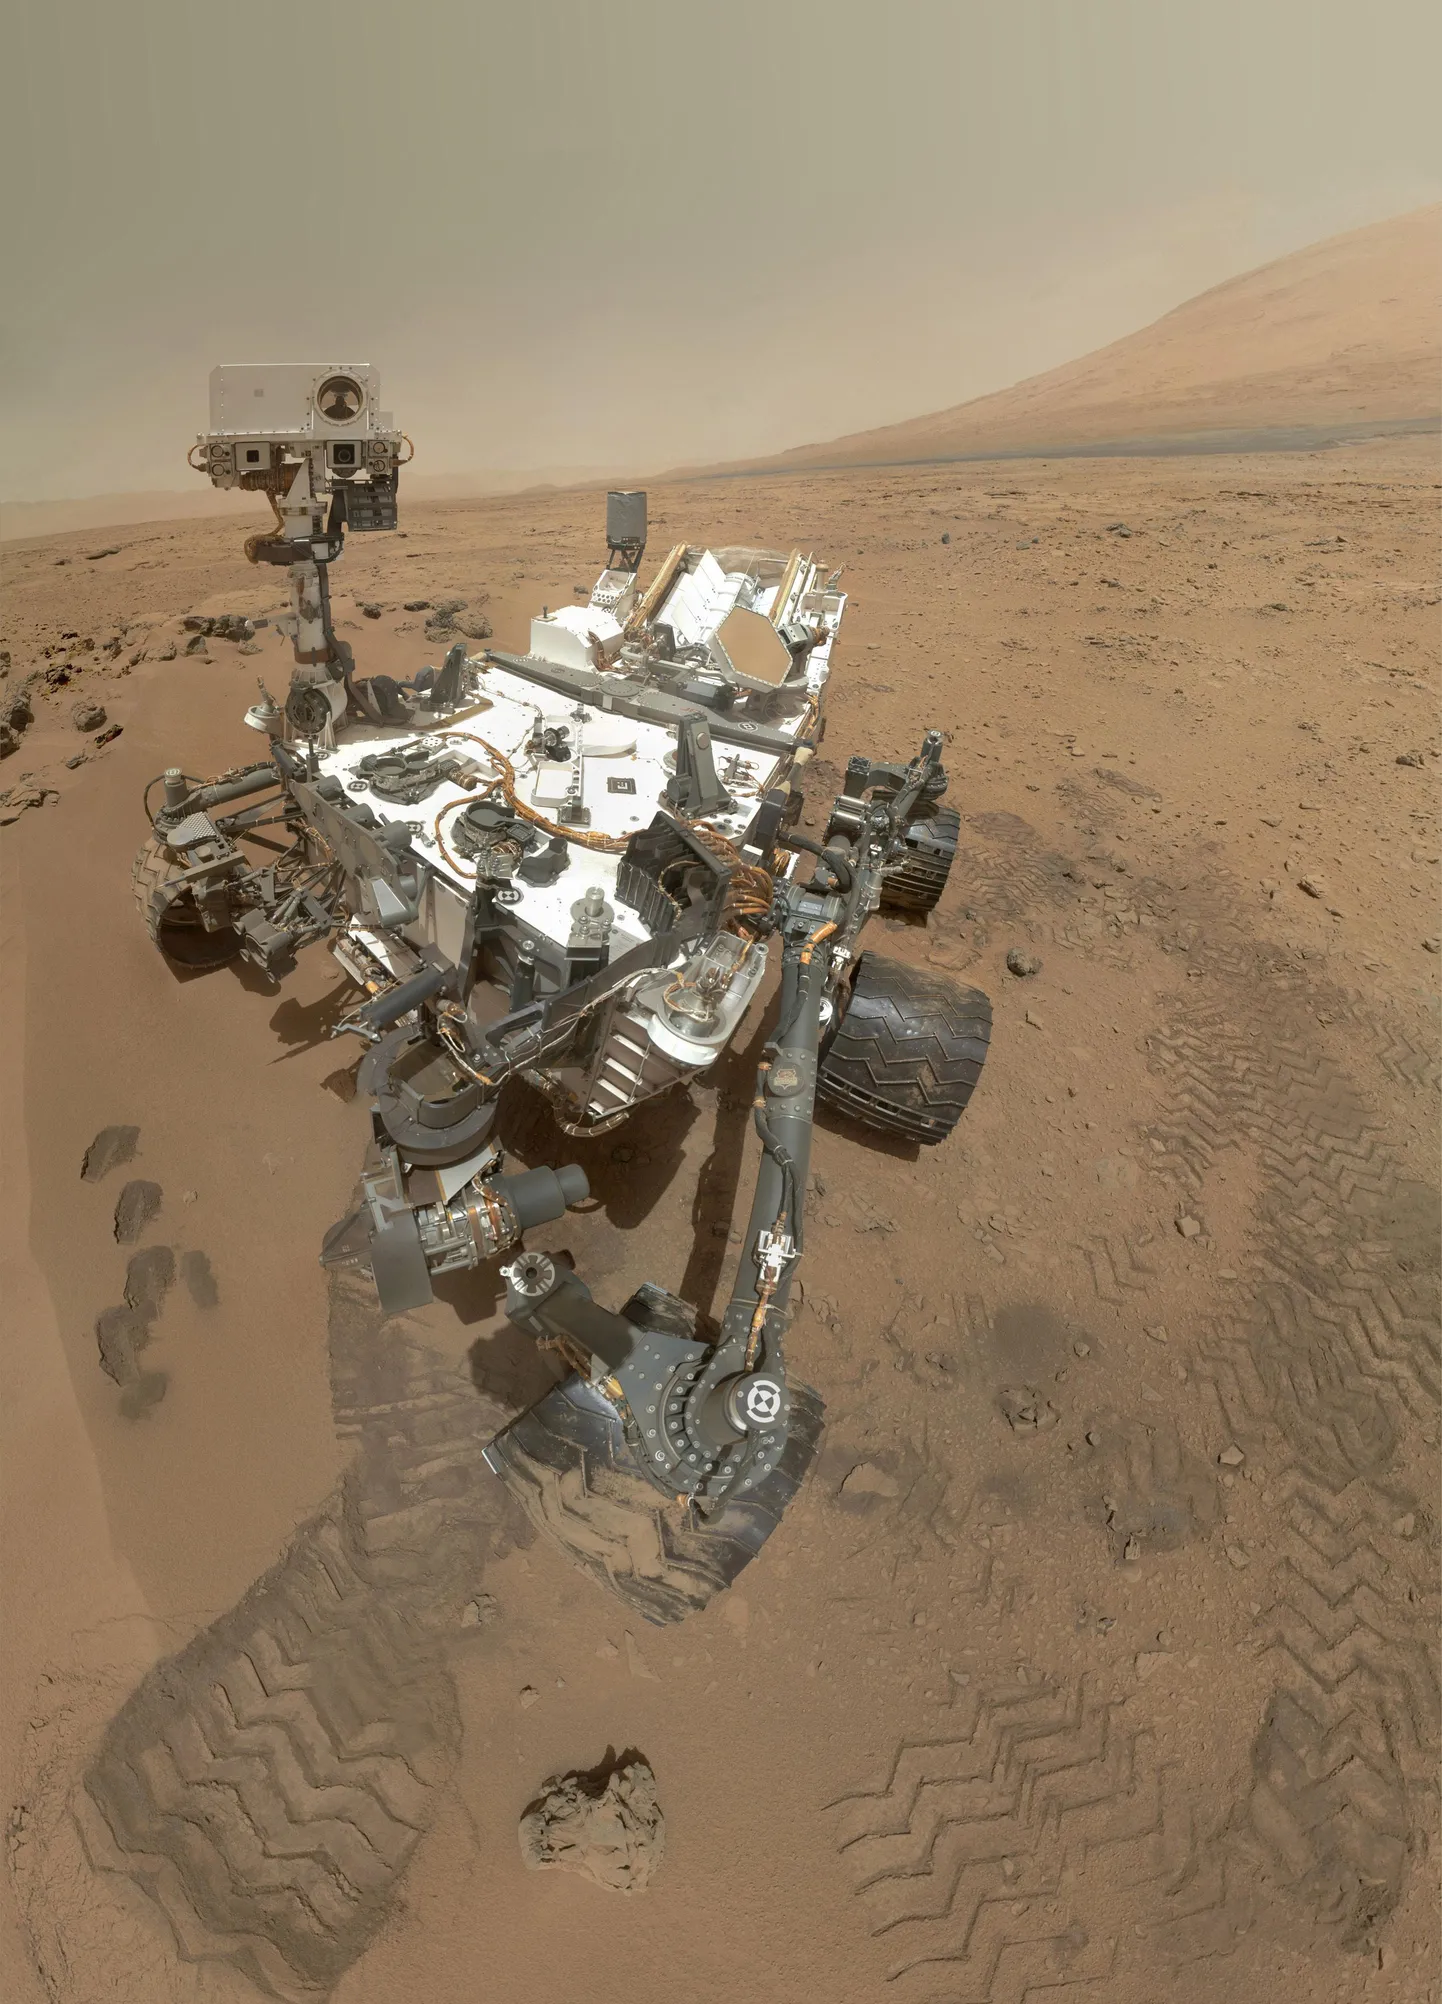 Curiosity värviline autoportree Marsi pinnal.